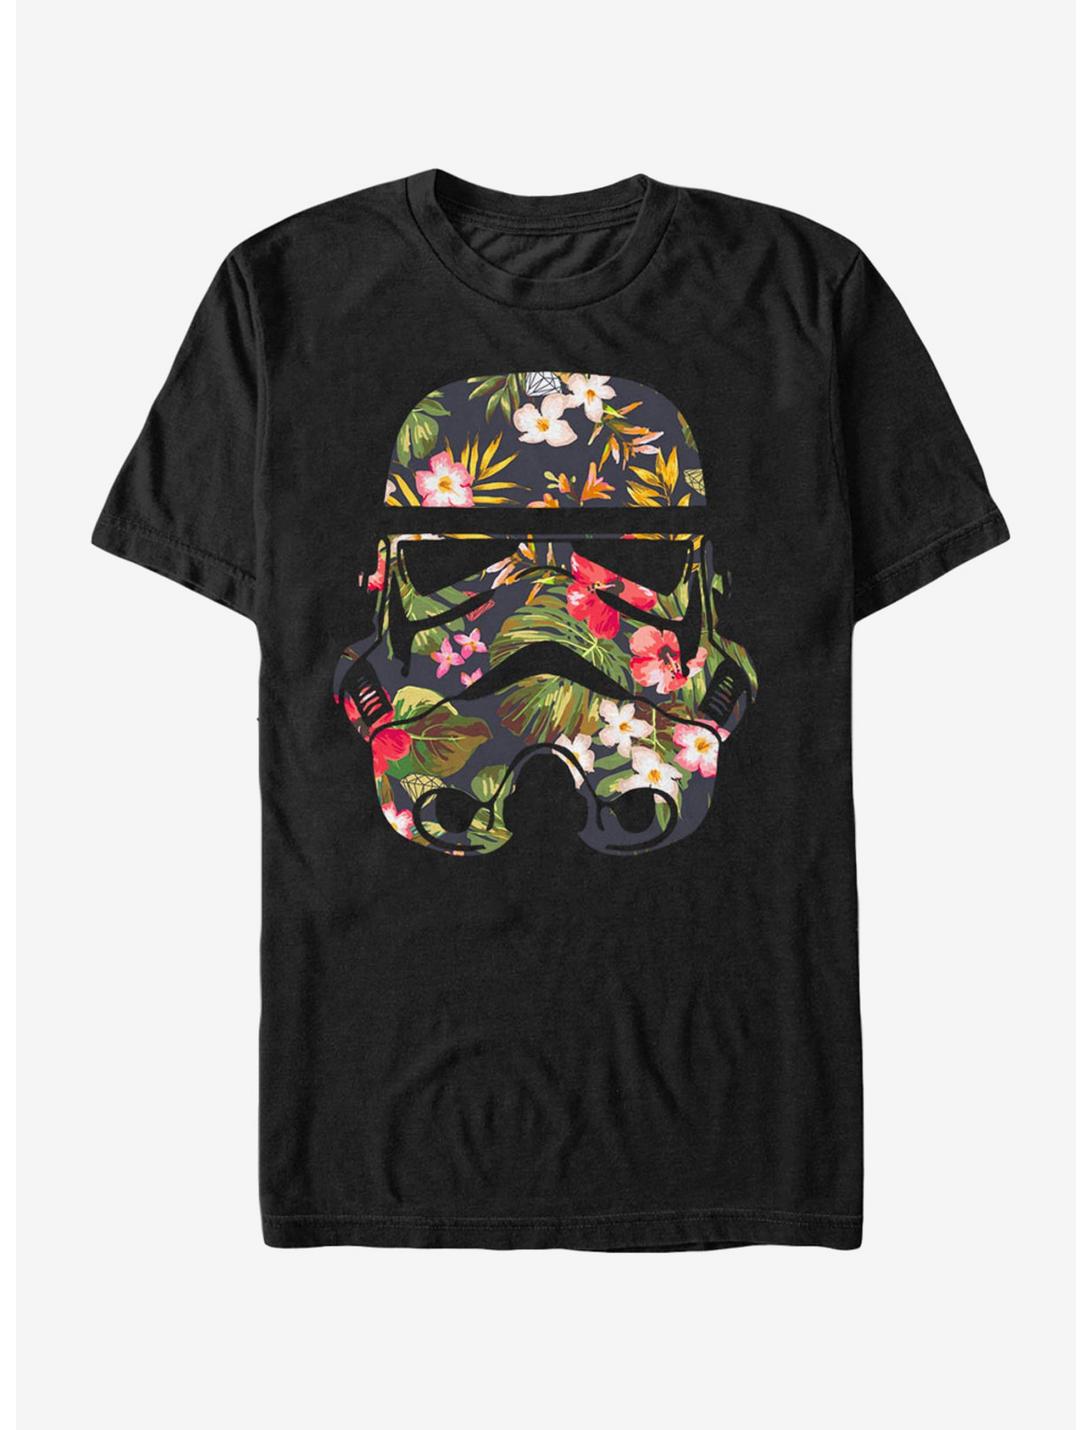 Star Wars Stormtrooper Tropical Helmet T-Shirt